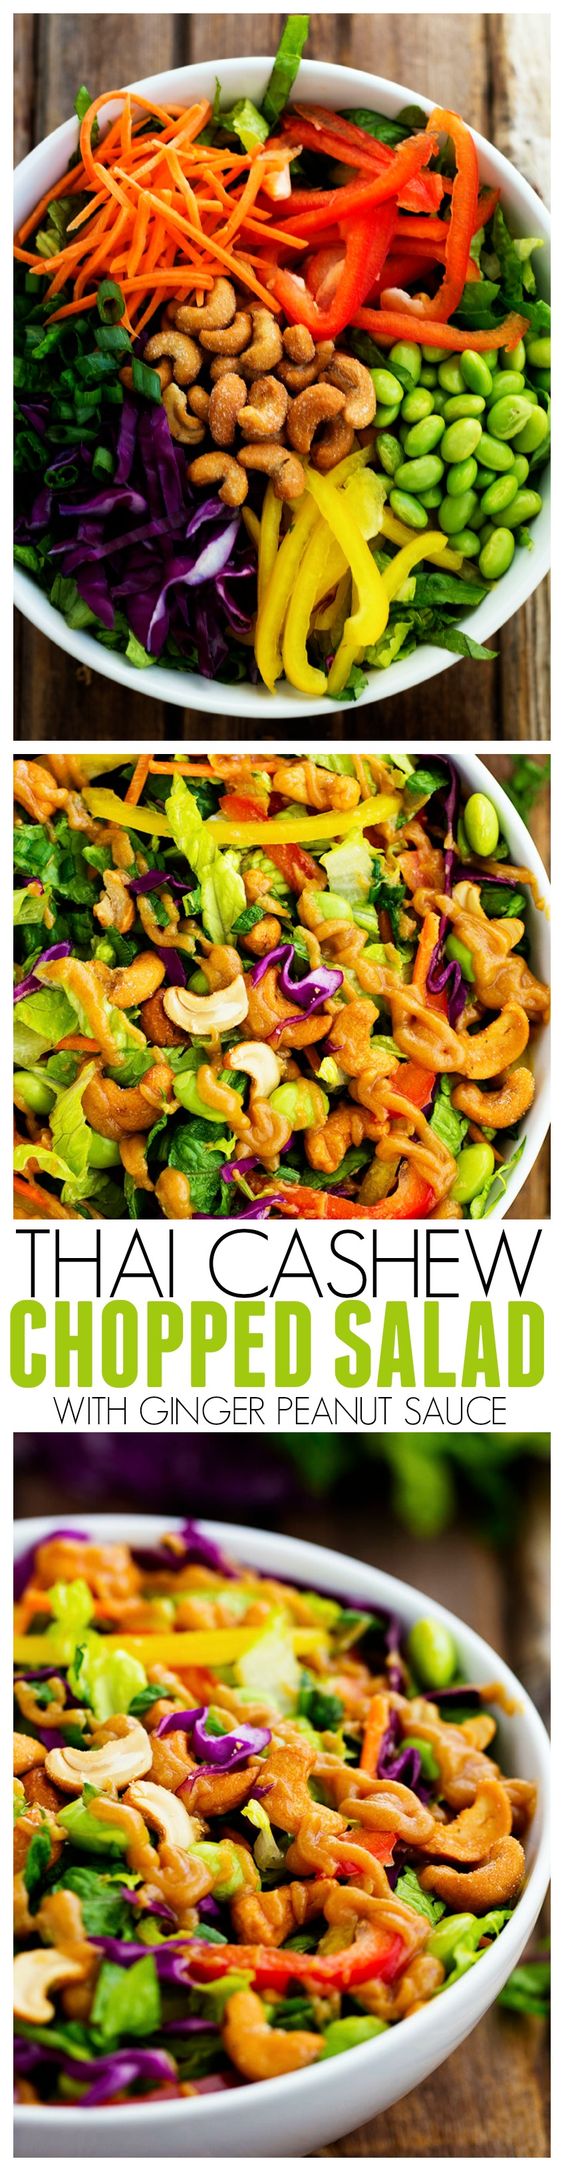 Most Pinned Salad Recipe on Pinterest 9